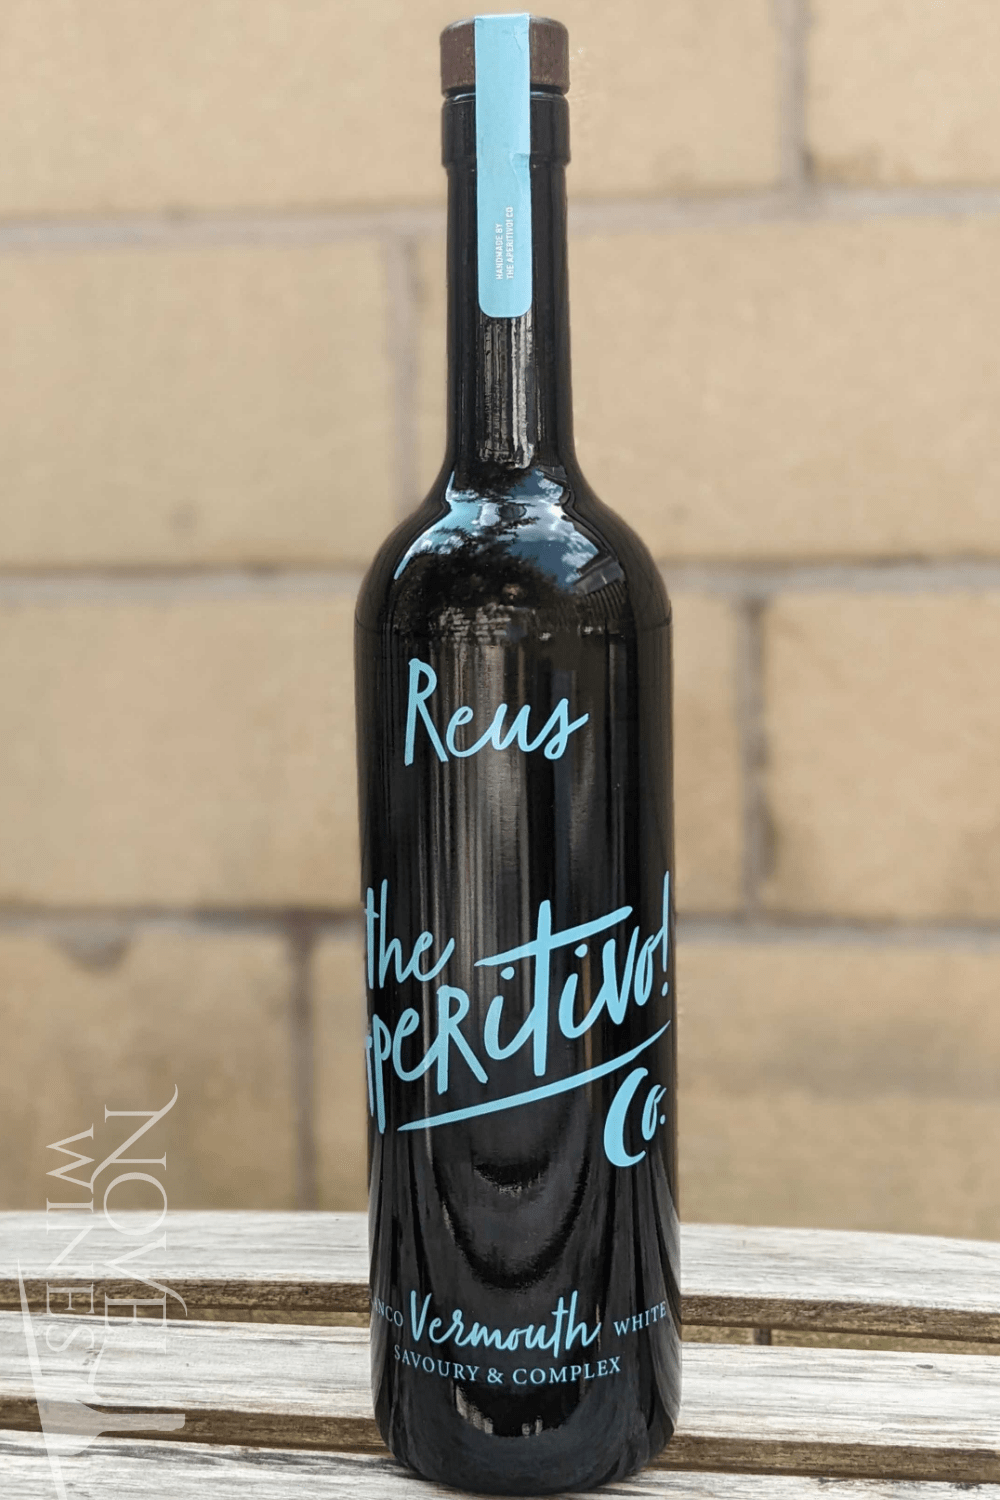 The Aperitivo Co. Liqueur The Aperitivo Co. Reus Blanco Vermouth 'Savoury & Complex' 16.0% abv, England